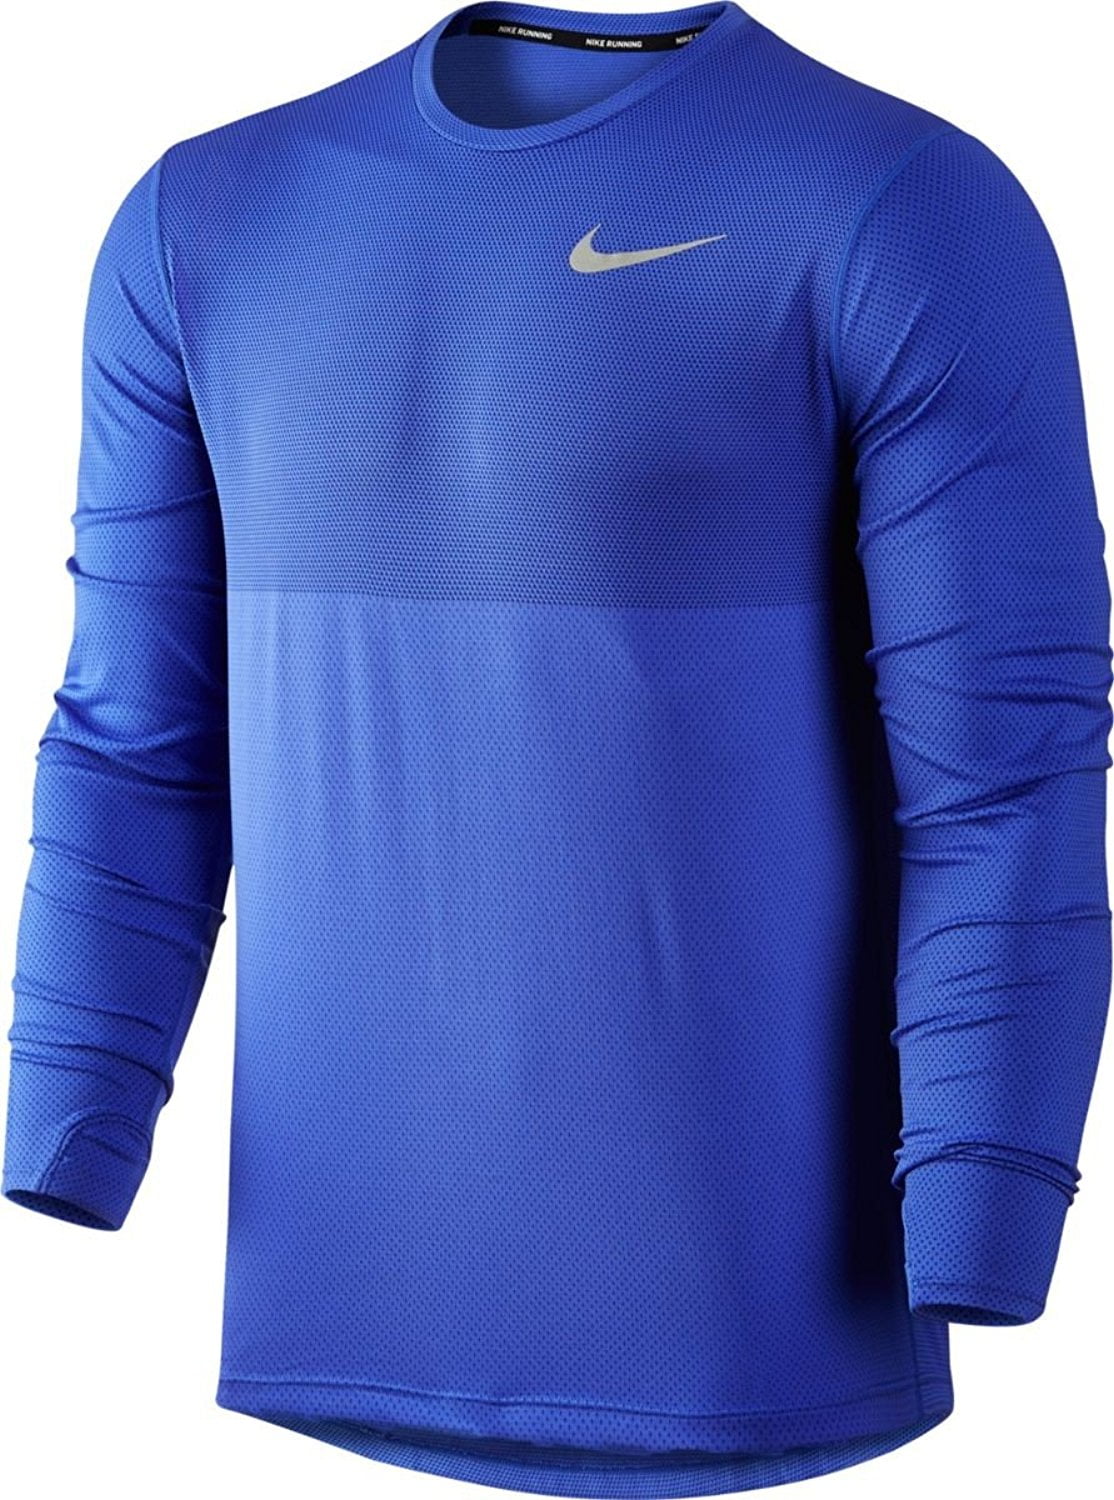 Nike Men's Zonal Cooling Relay Long Sleeve Running Shirt-Blue - Walmart.com